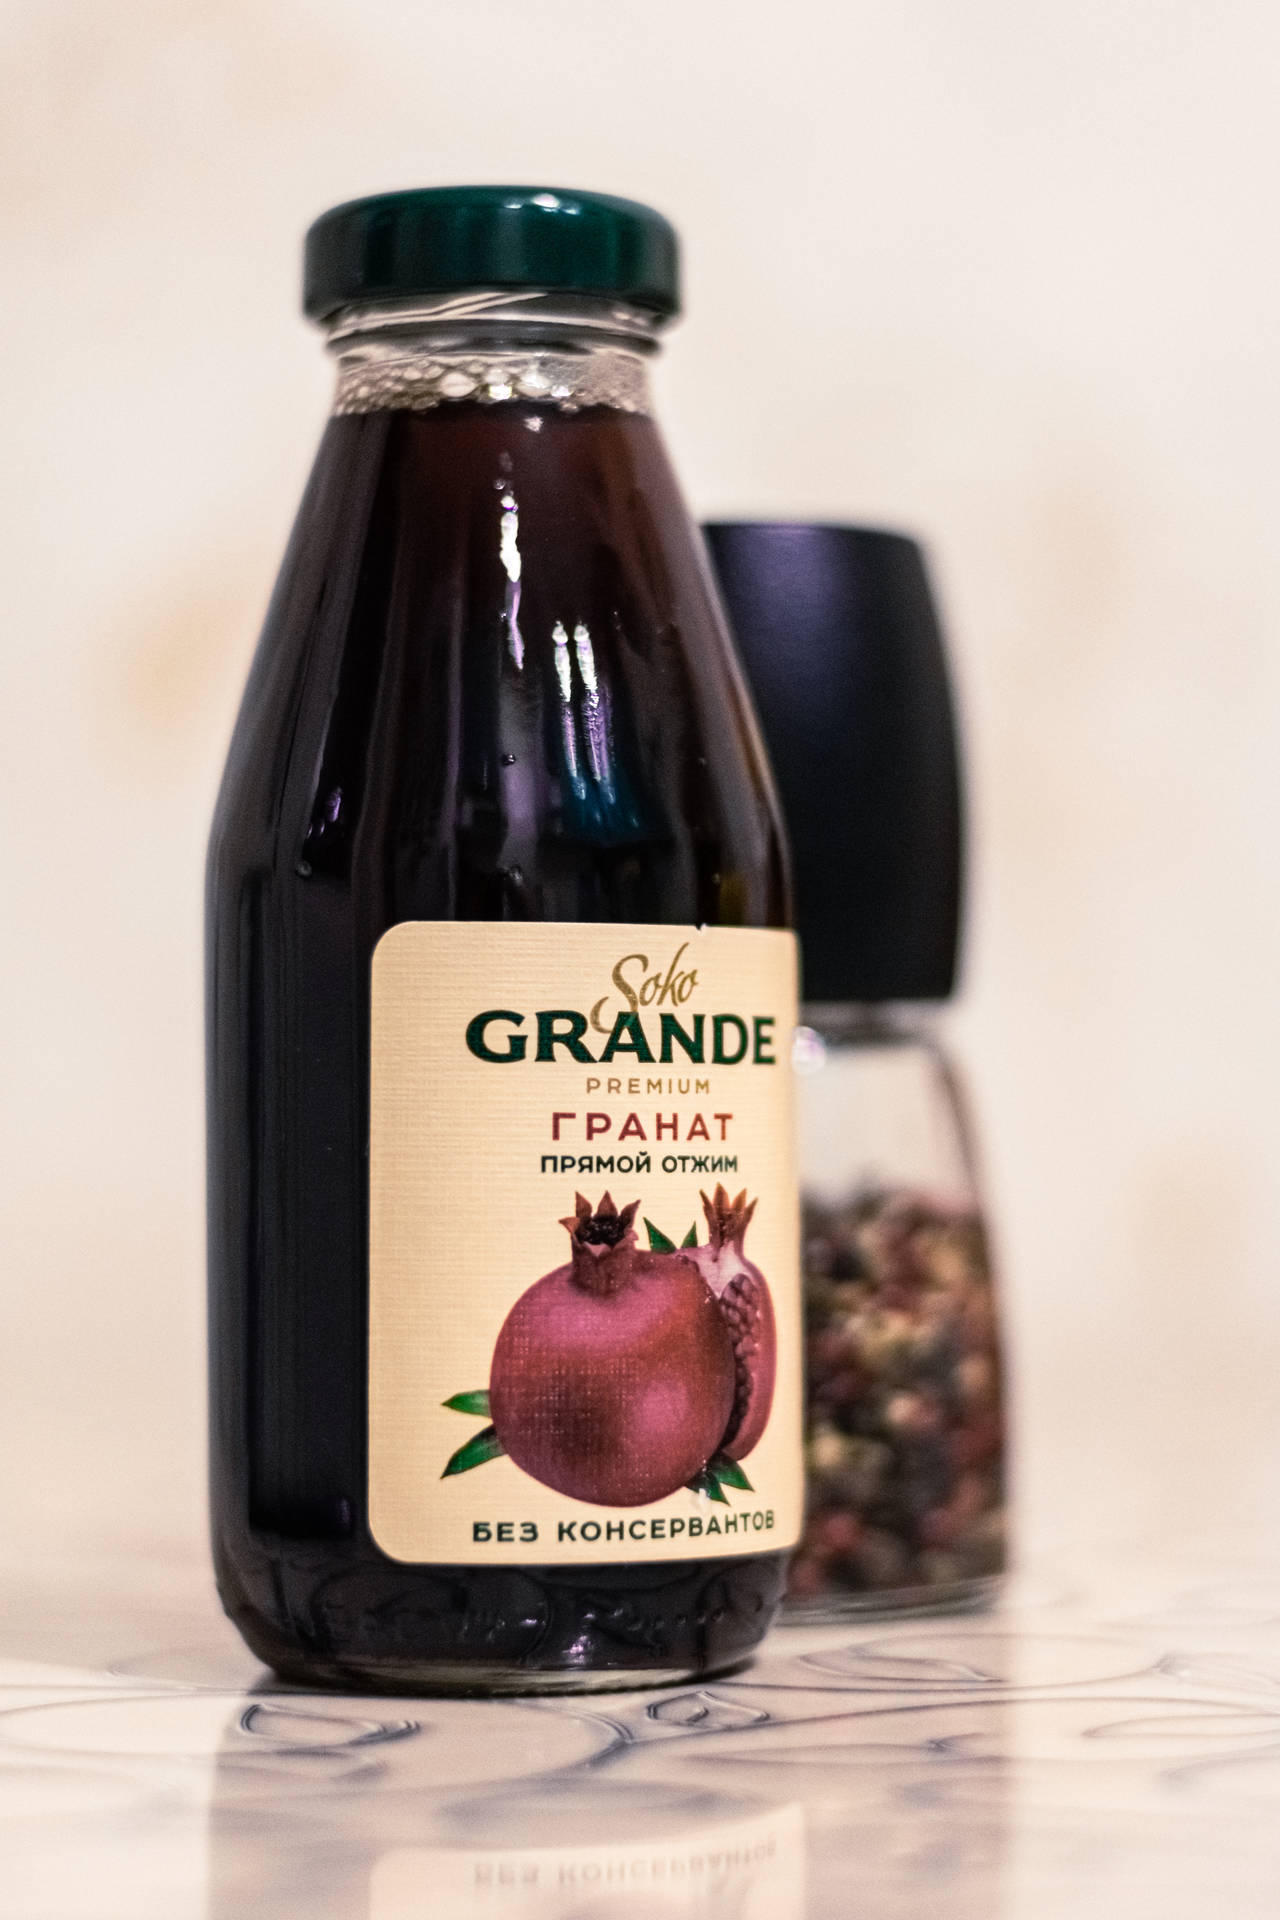 Garnet Fruit Juice Bottle Background